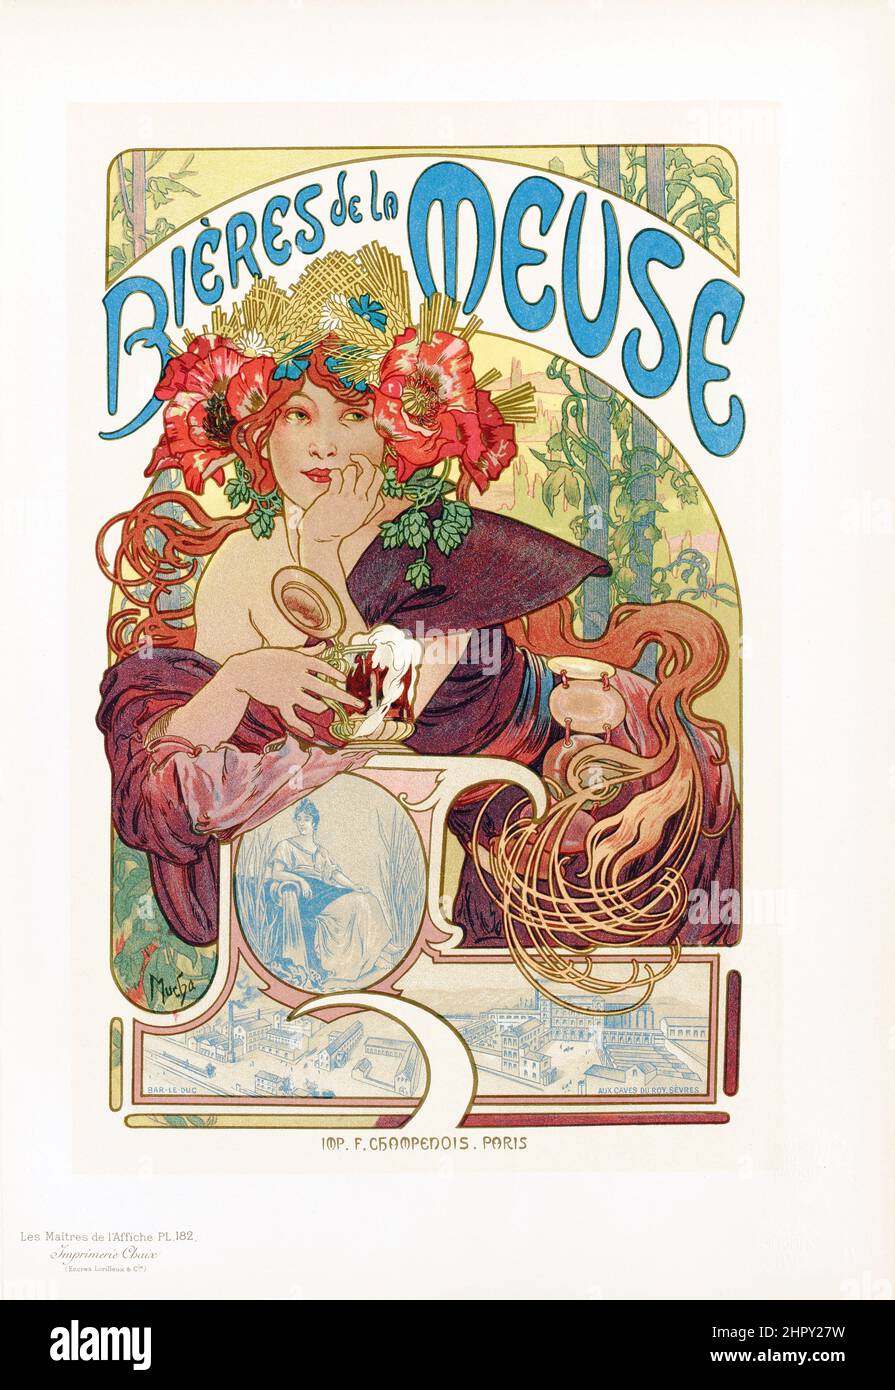 Maitres de l'affiche Band 4 - Platte 182 - Alfons Mucha, 1895 - Bieres de la Meuse. Jugendstil-Poster. Stockfoto